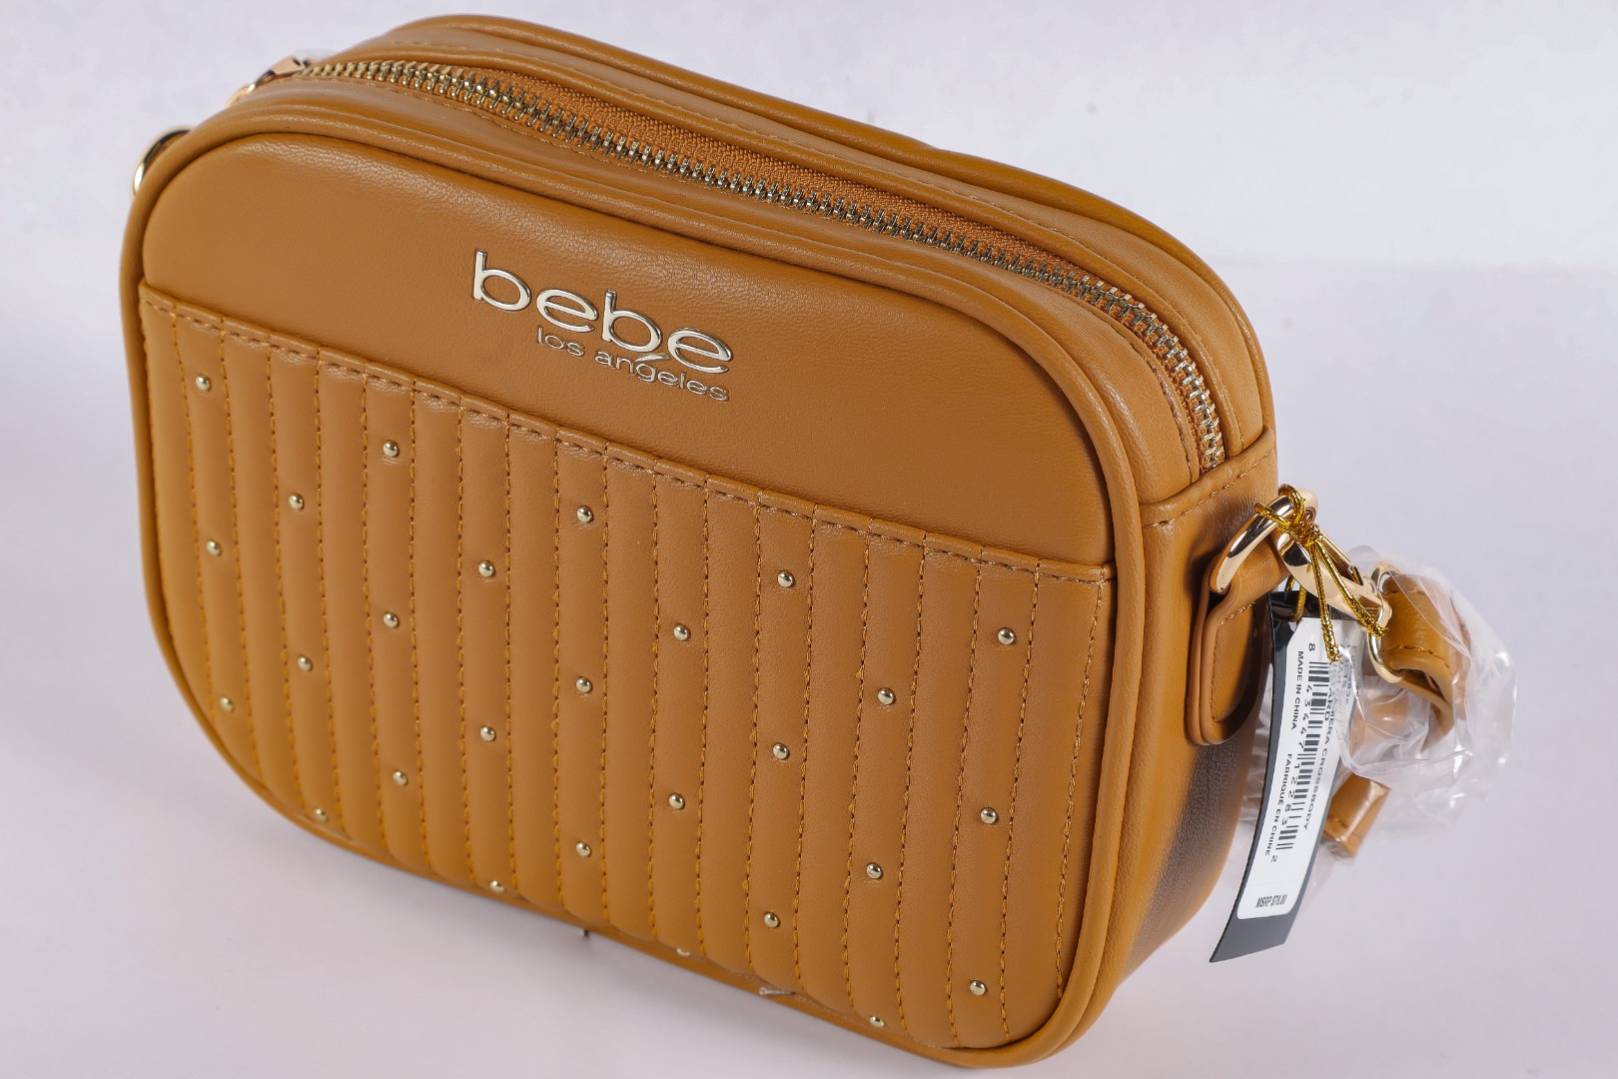 Perforar O cualquiera resistirse Via Trading | Assorted Bebe New Overstock Handbags Loads